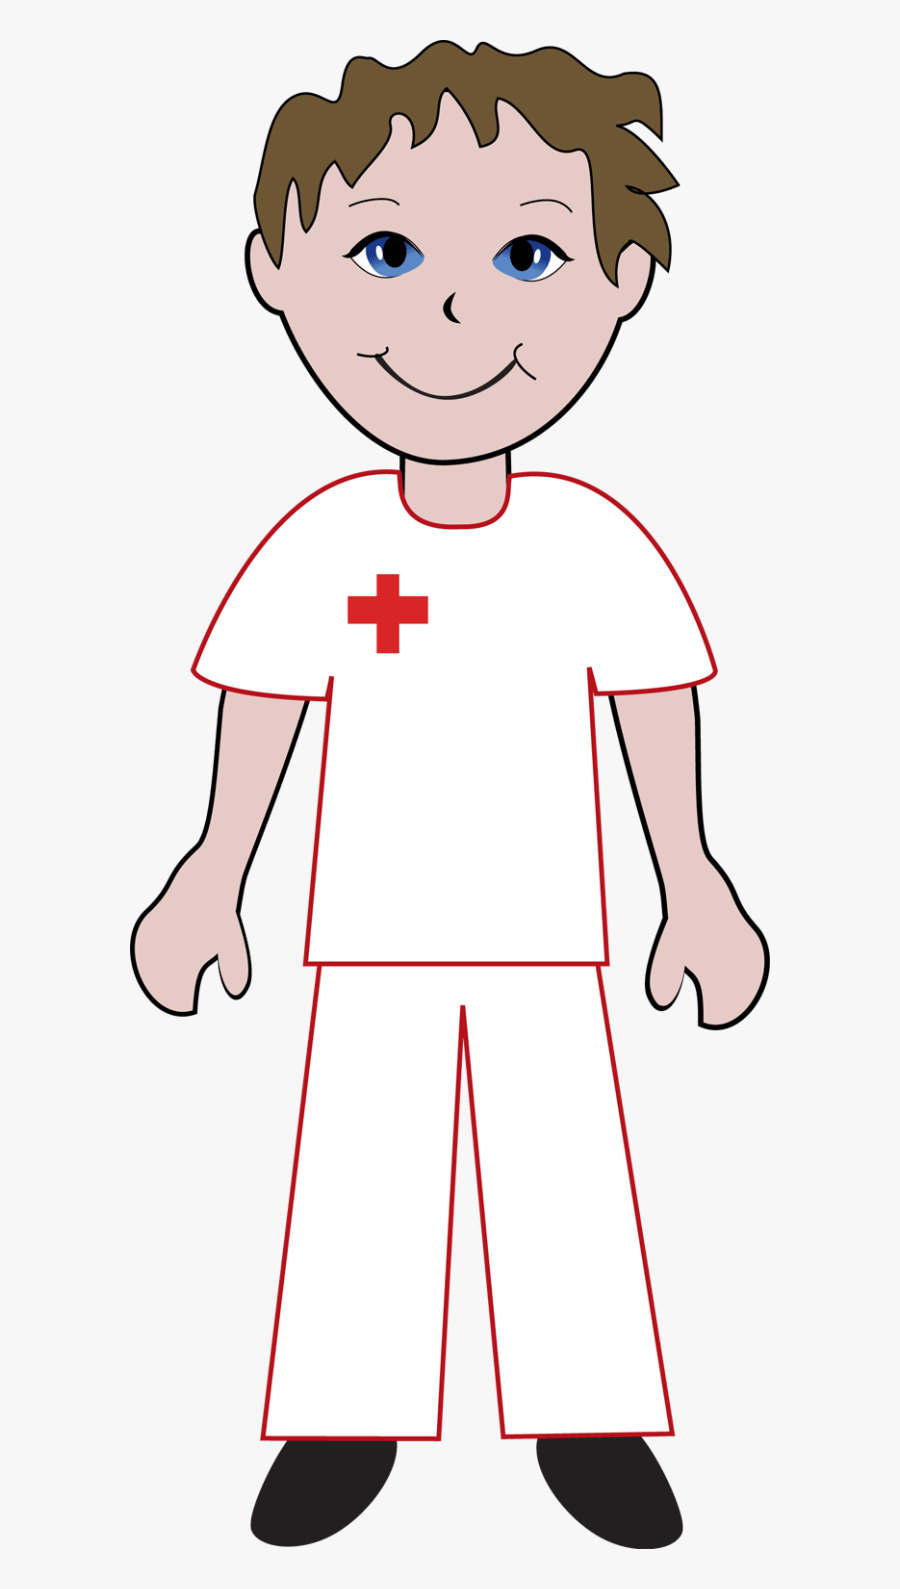 Nursing Nurse Clipart Free Clip Art Image Image - Male Nurse Clipar...